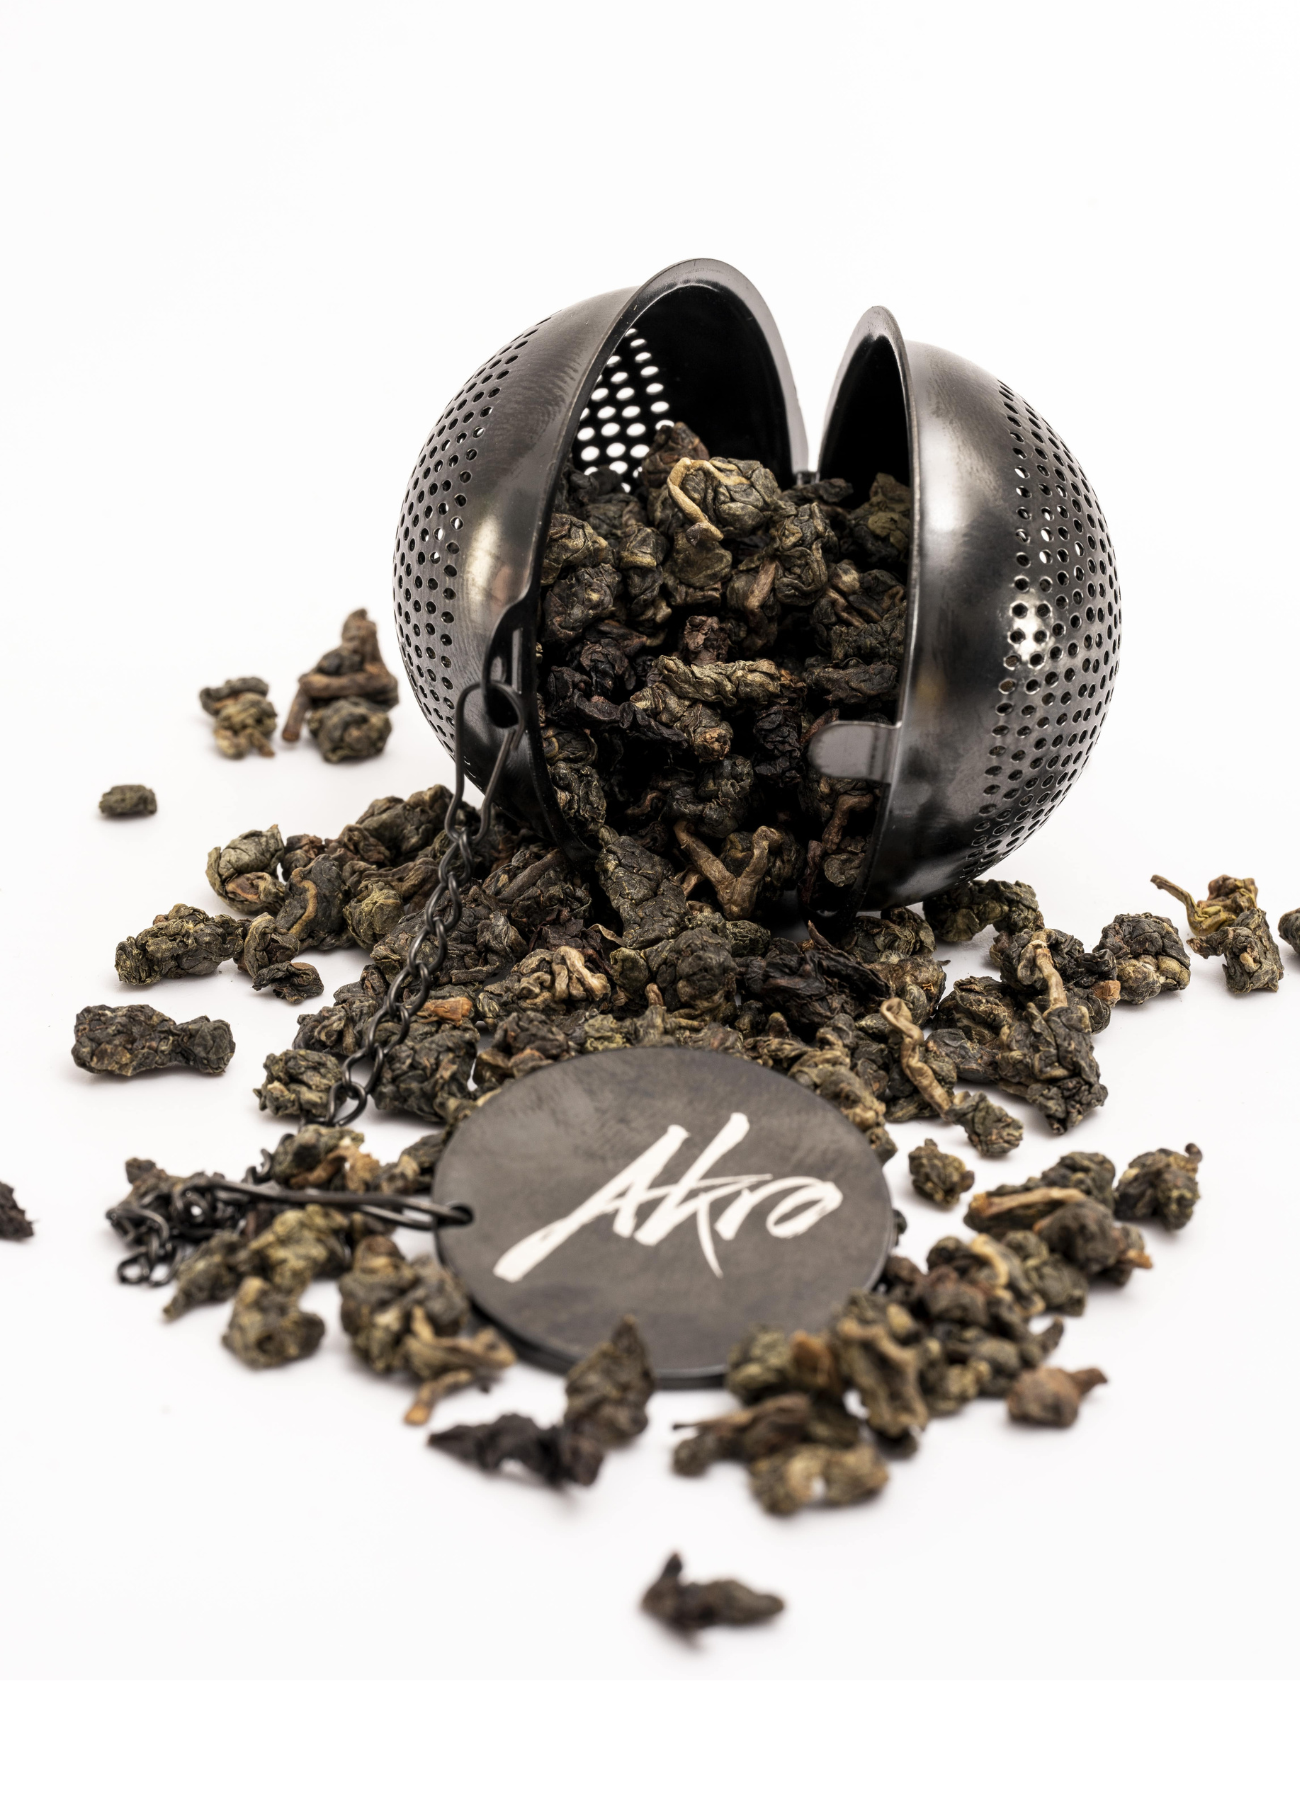 akro tea infuser